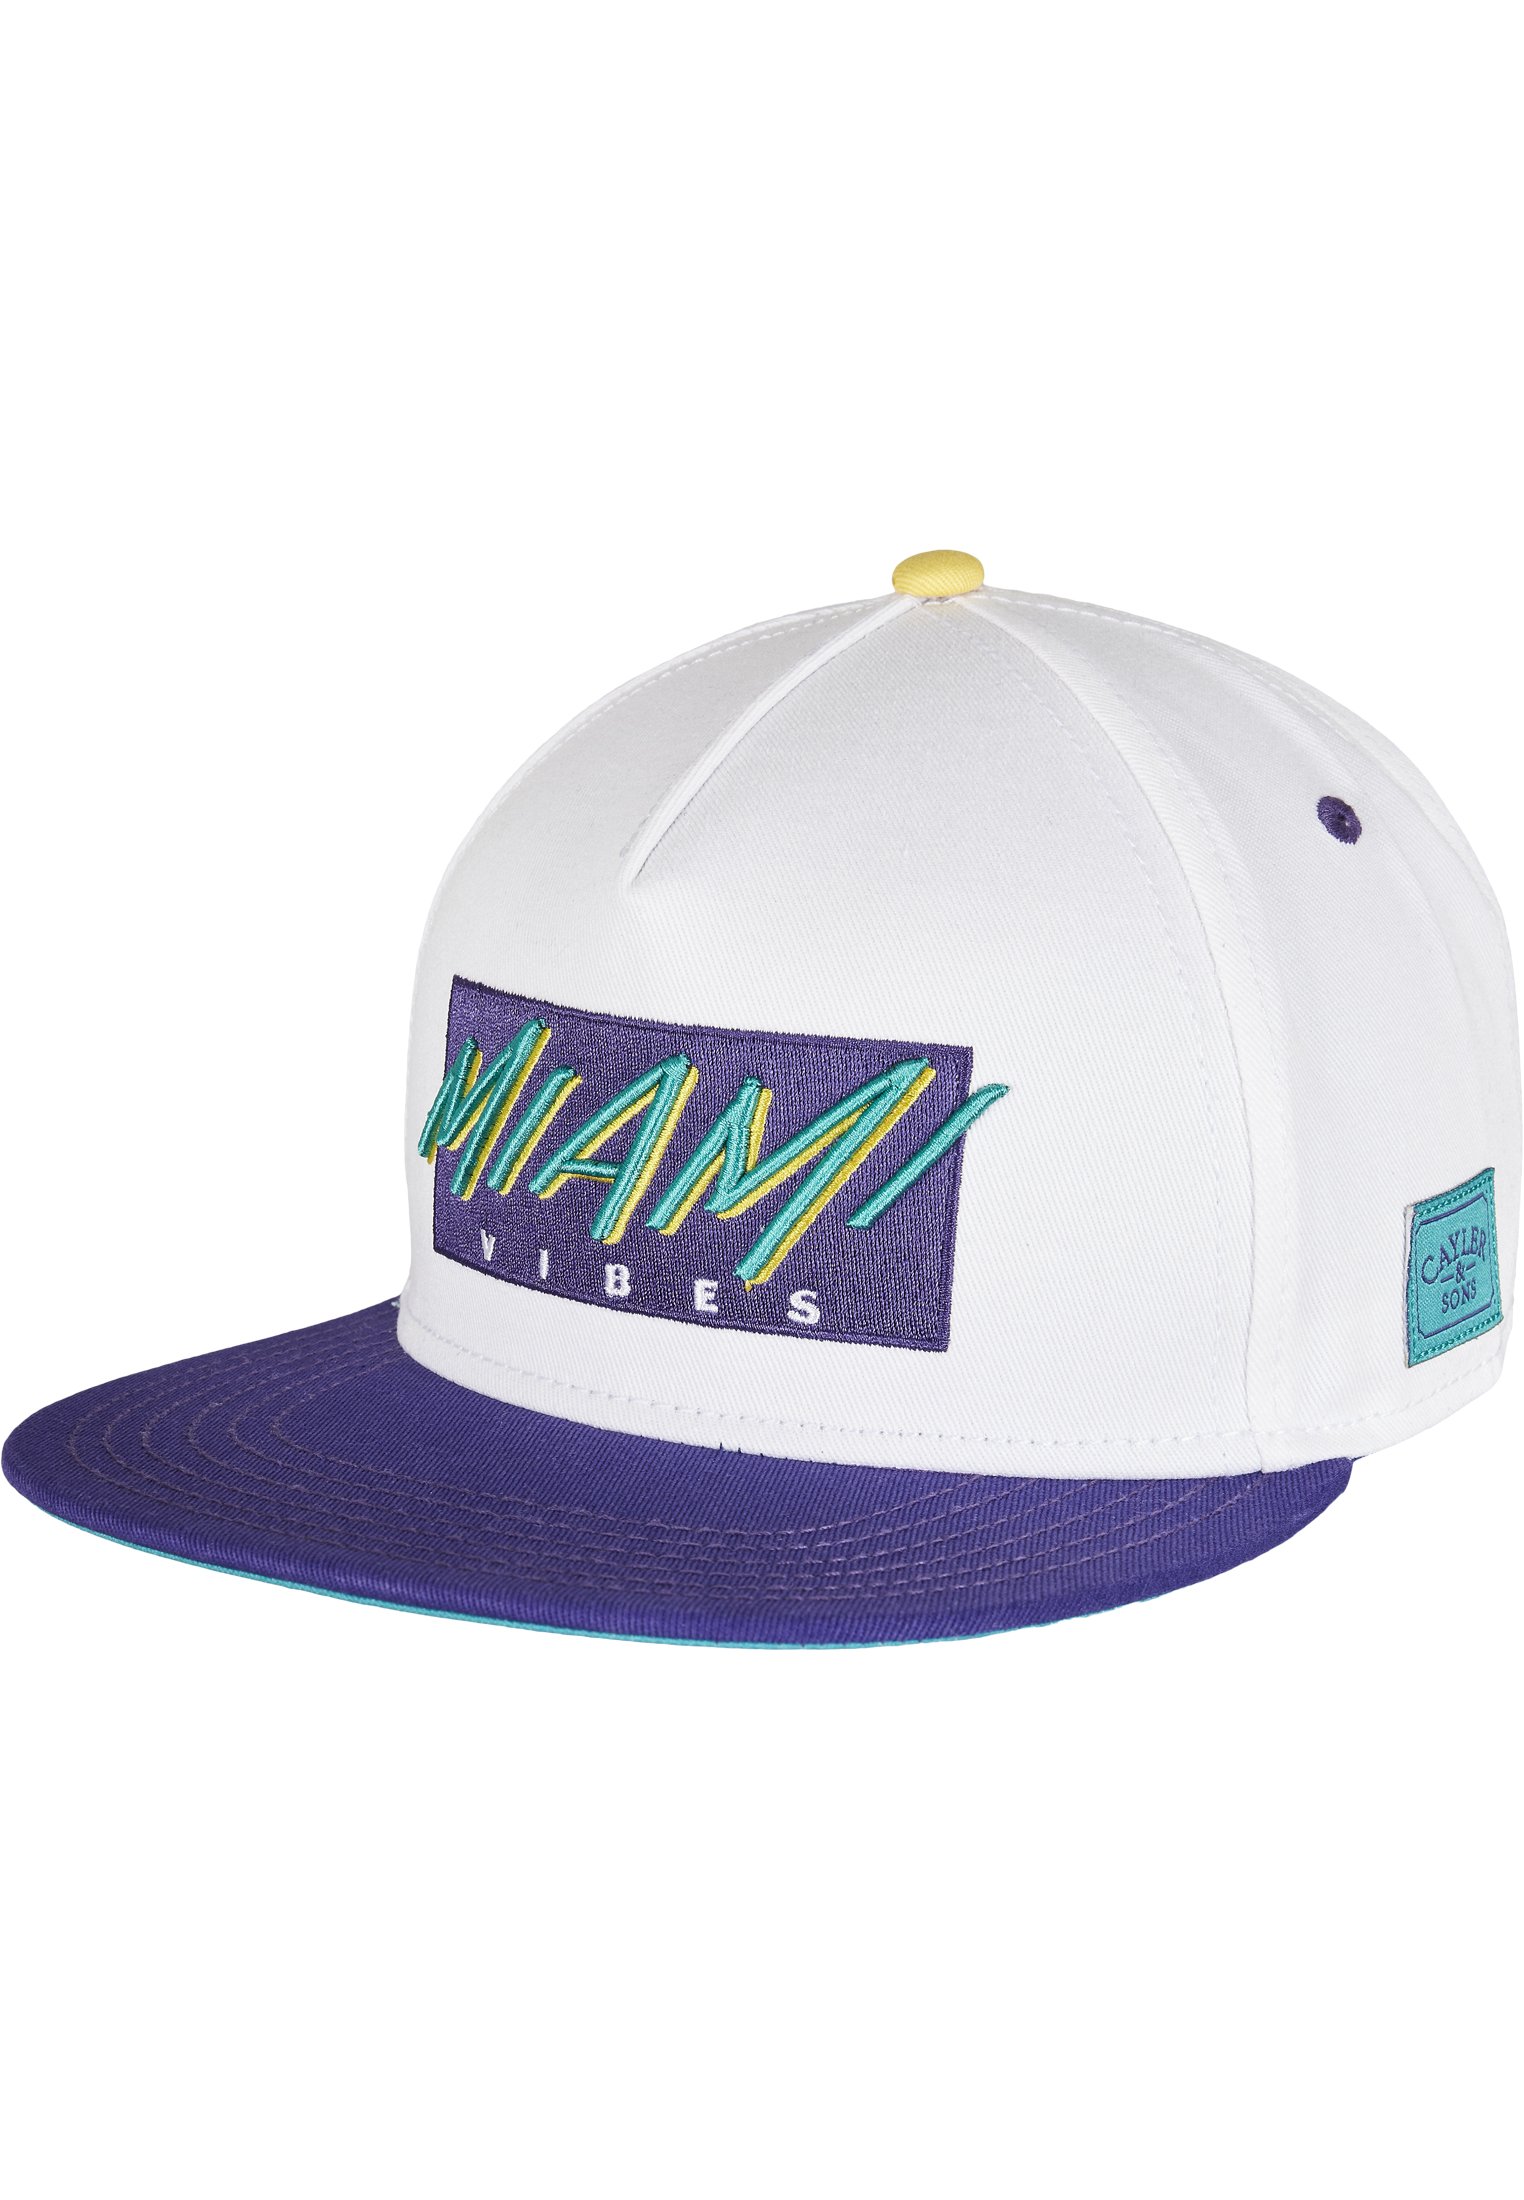 C&S WL Miami Vibes Snapback white/mc one size